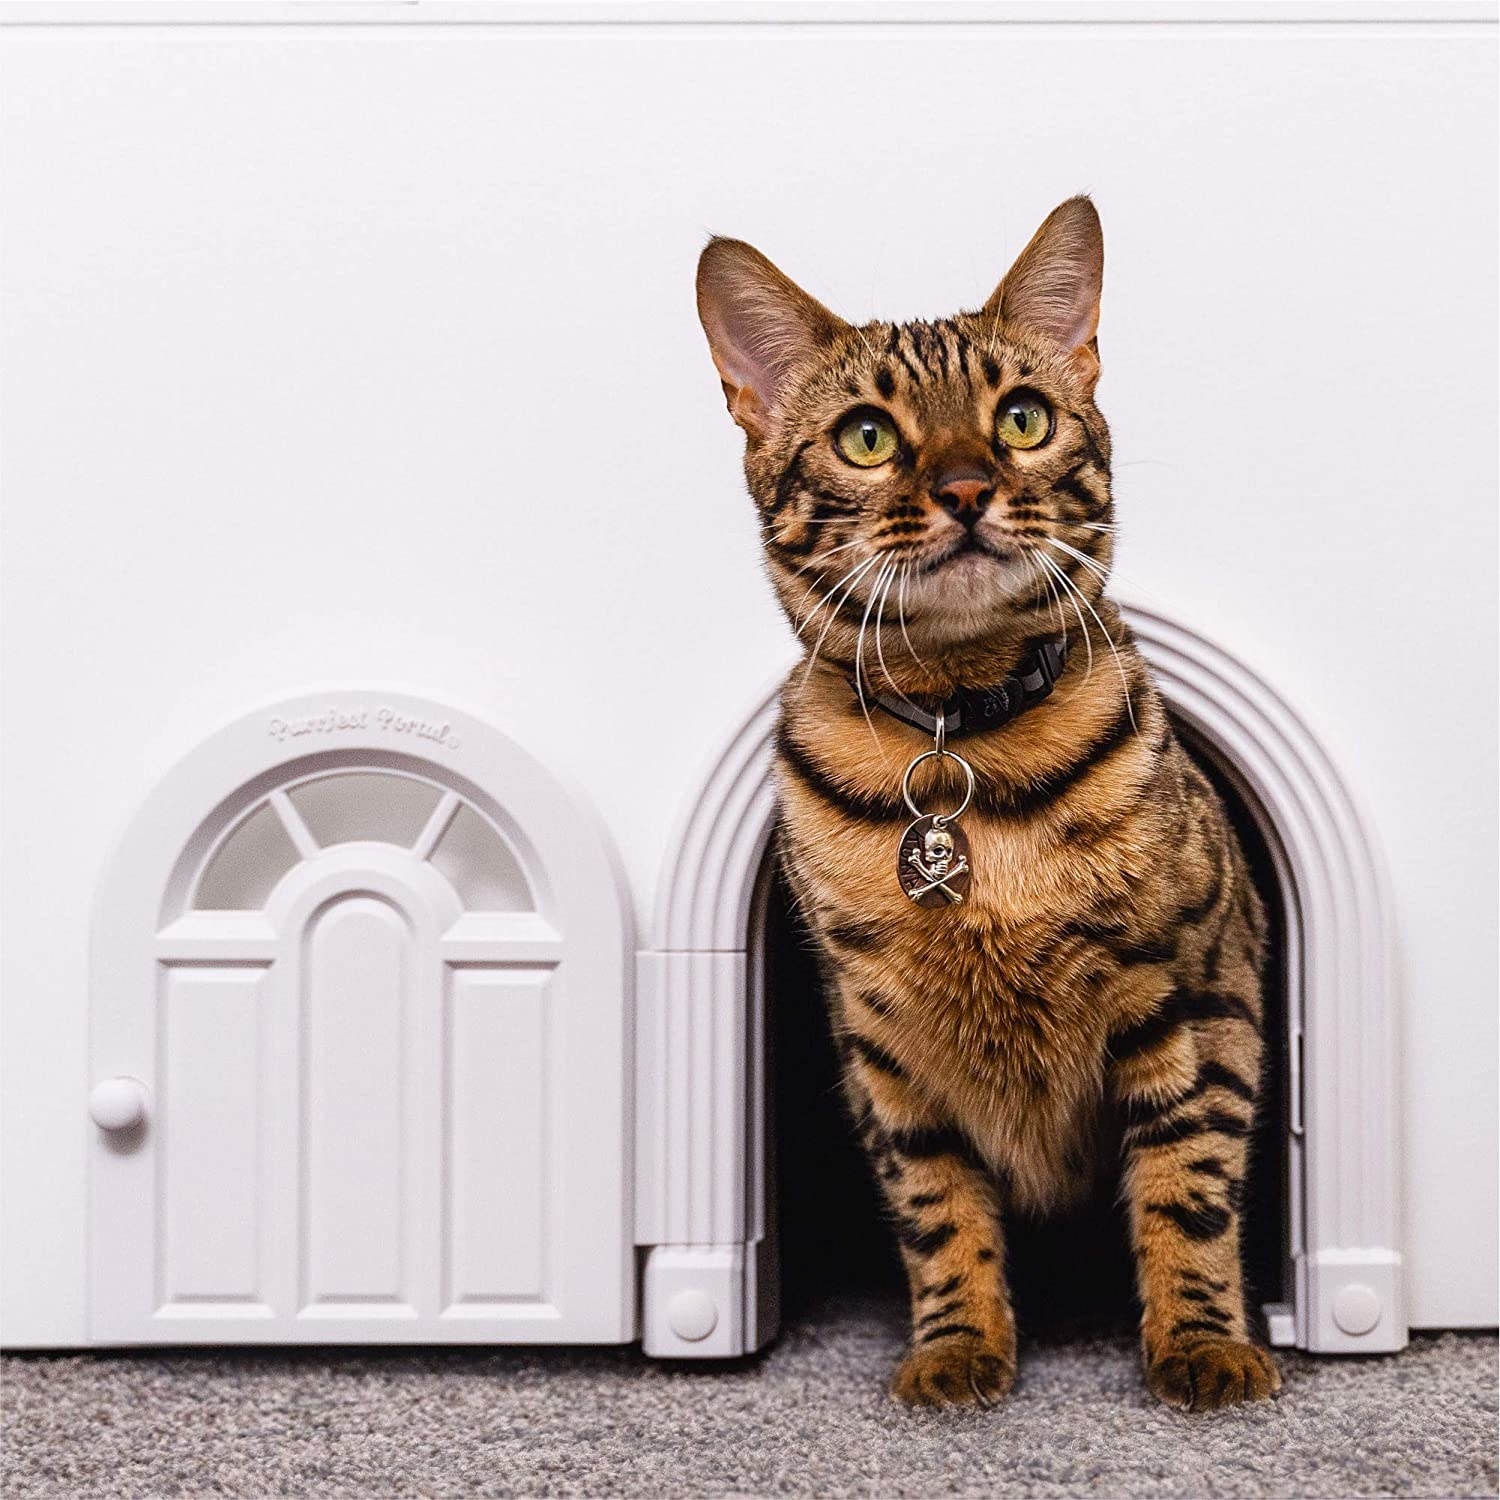 A small cat is walking through a pet door